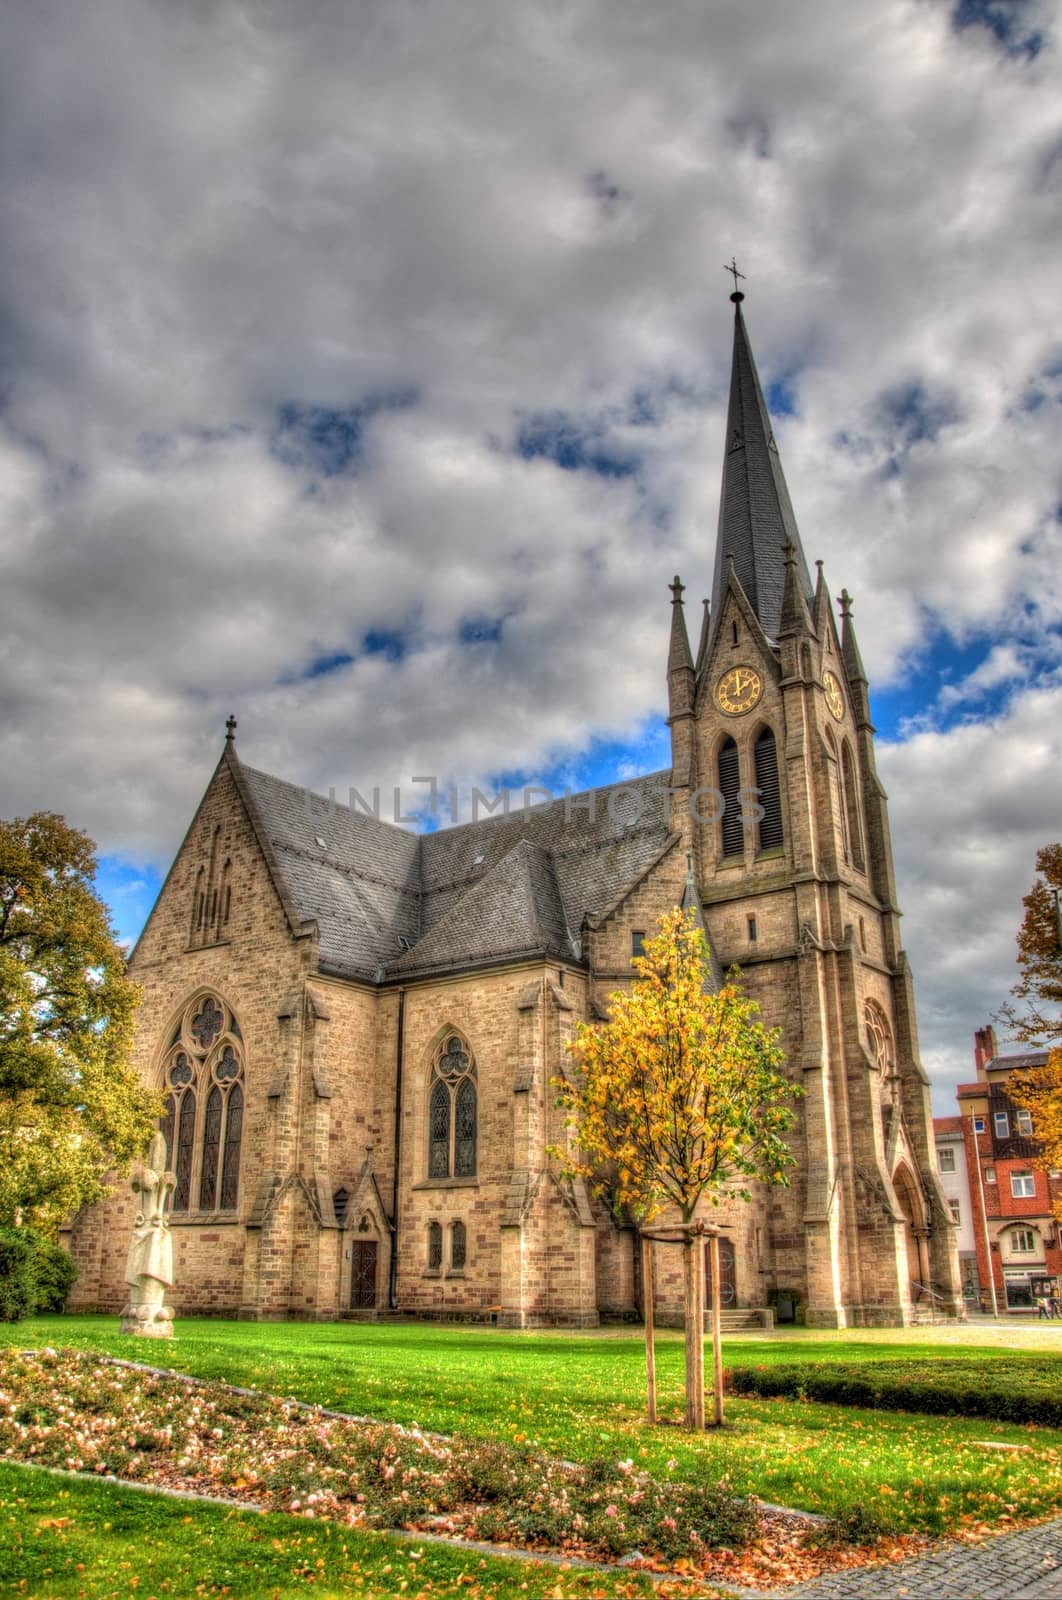 Old Catholic church in Fulda in Hessen, Germany